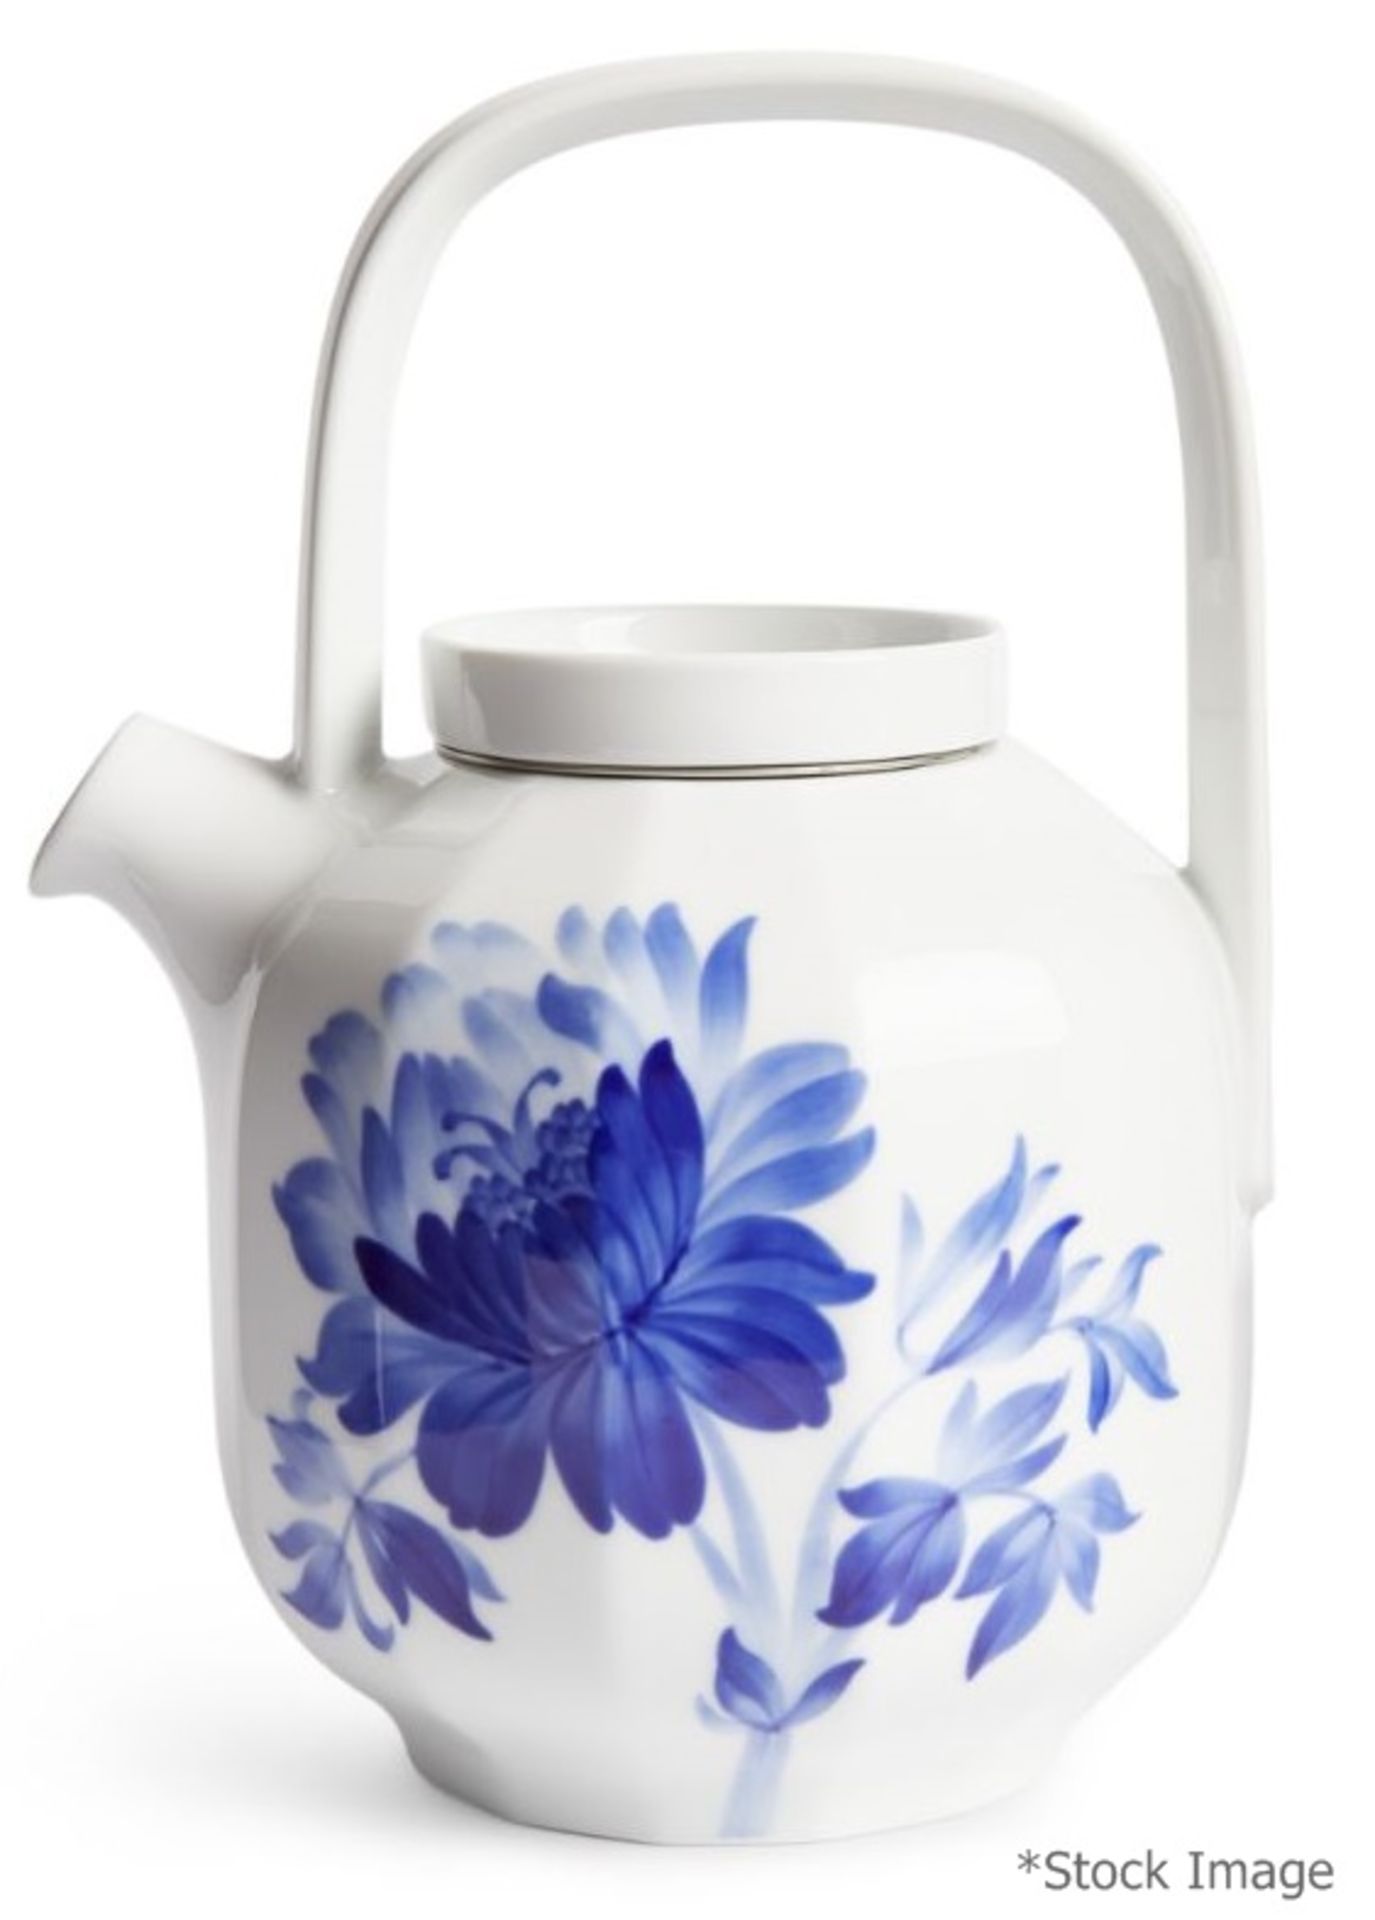 1 x ROYAL COPENHAGEN 'Blomst' Peony Tree Handcrafted Porcelain Teapot - Original Price £125.00